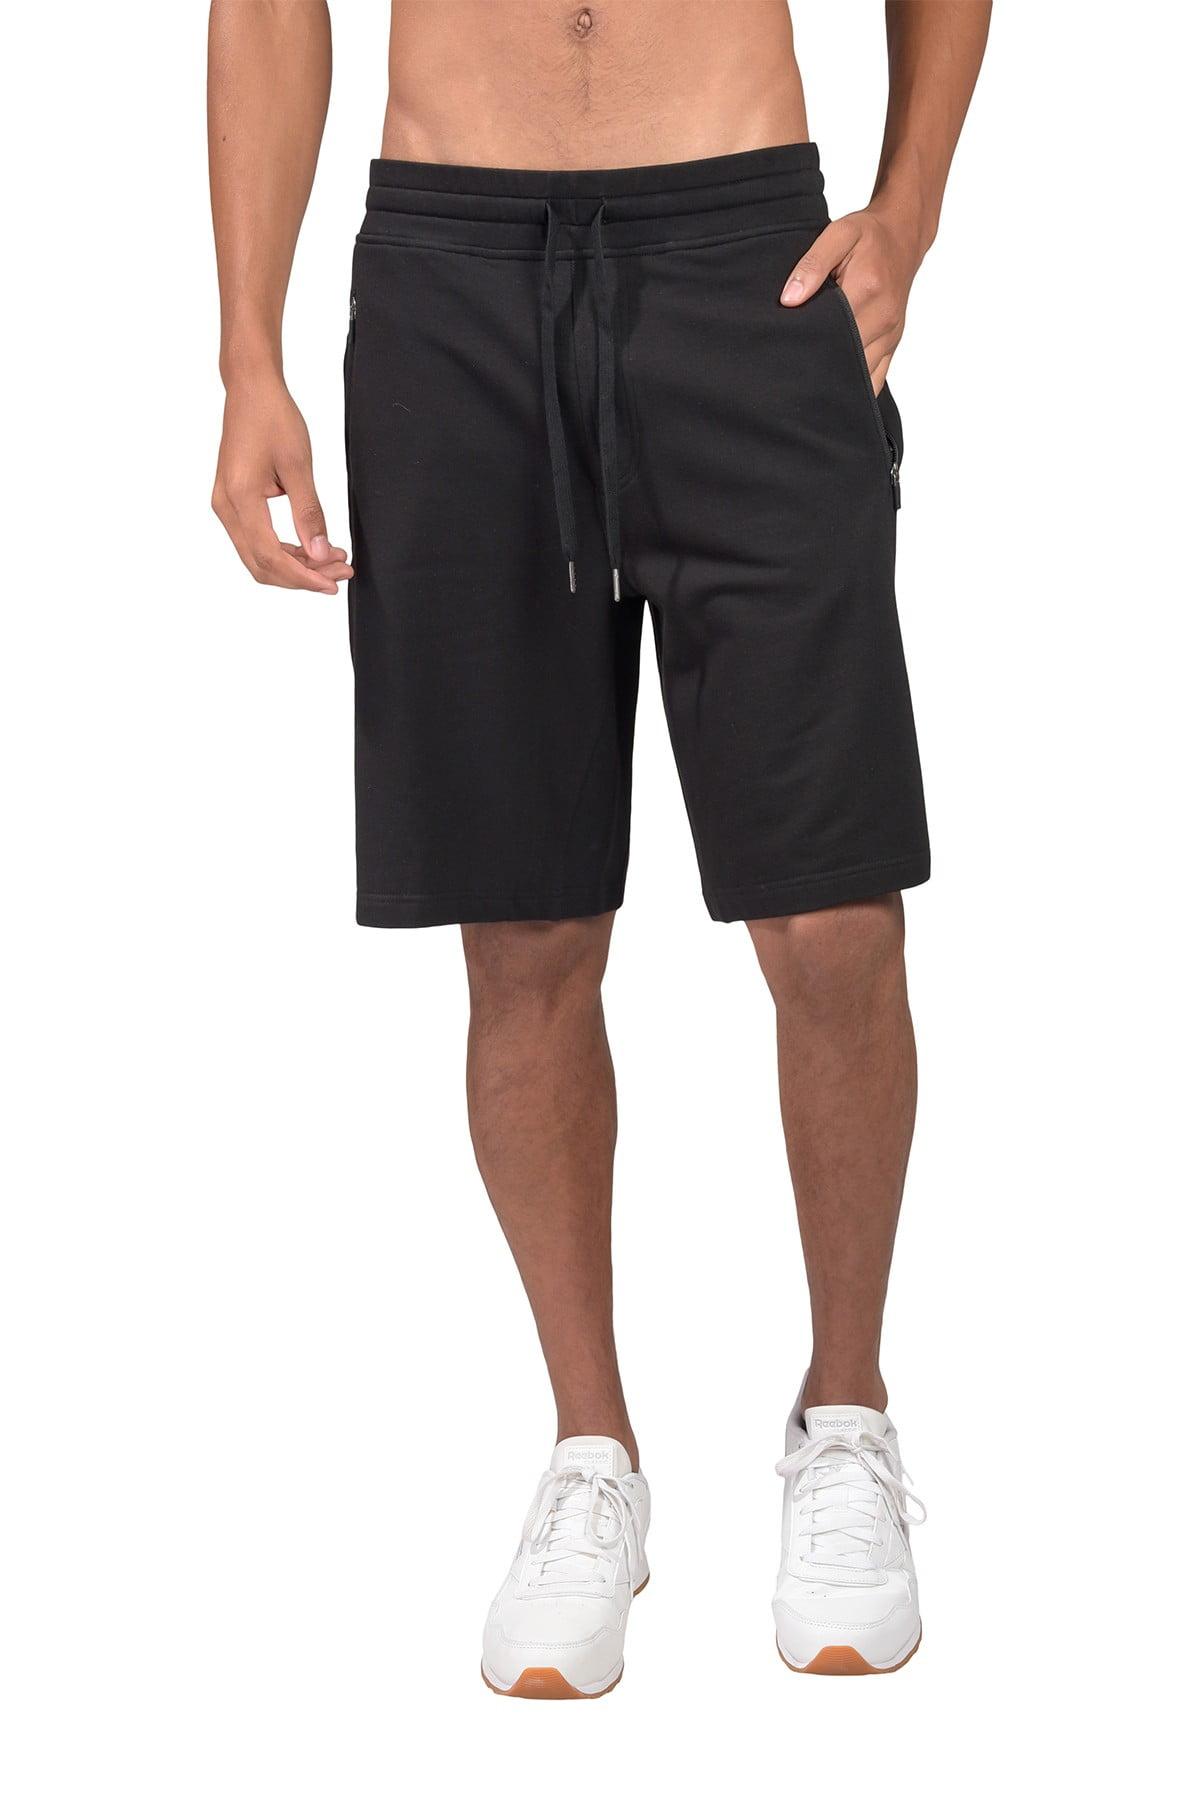 90 Degrees Cotton Drawstring Zip Pocket Shorts in Black for Men - Lyst